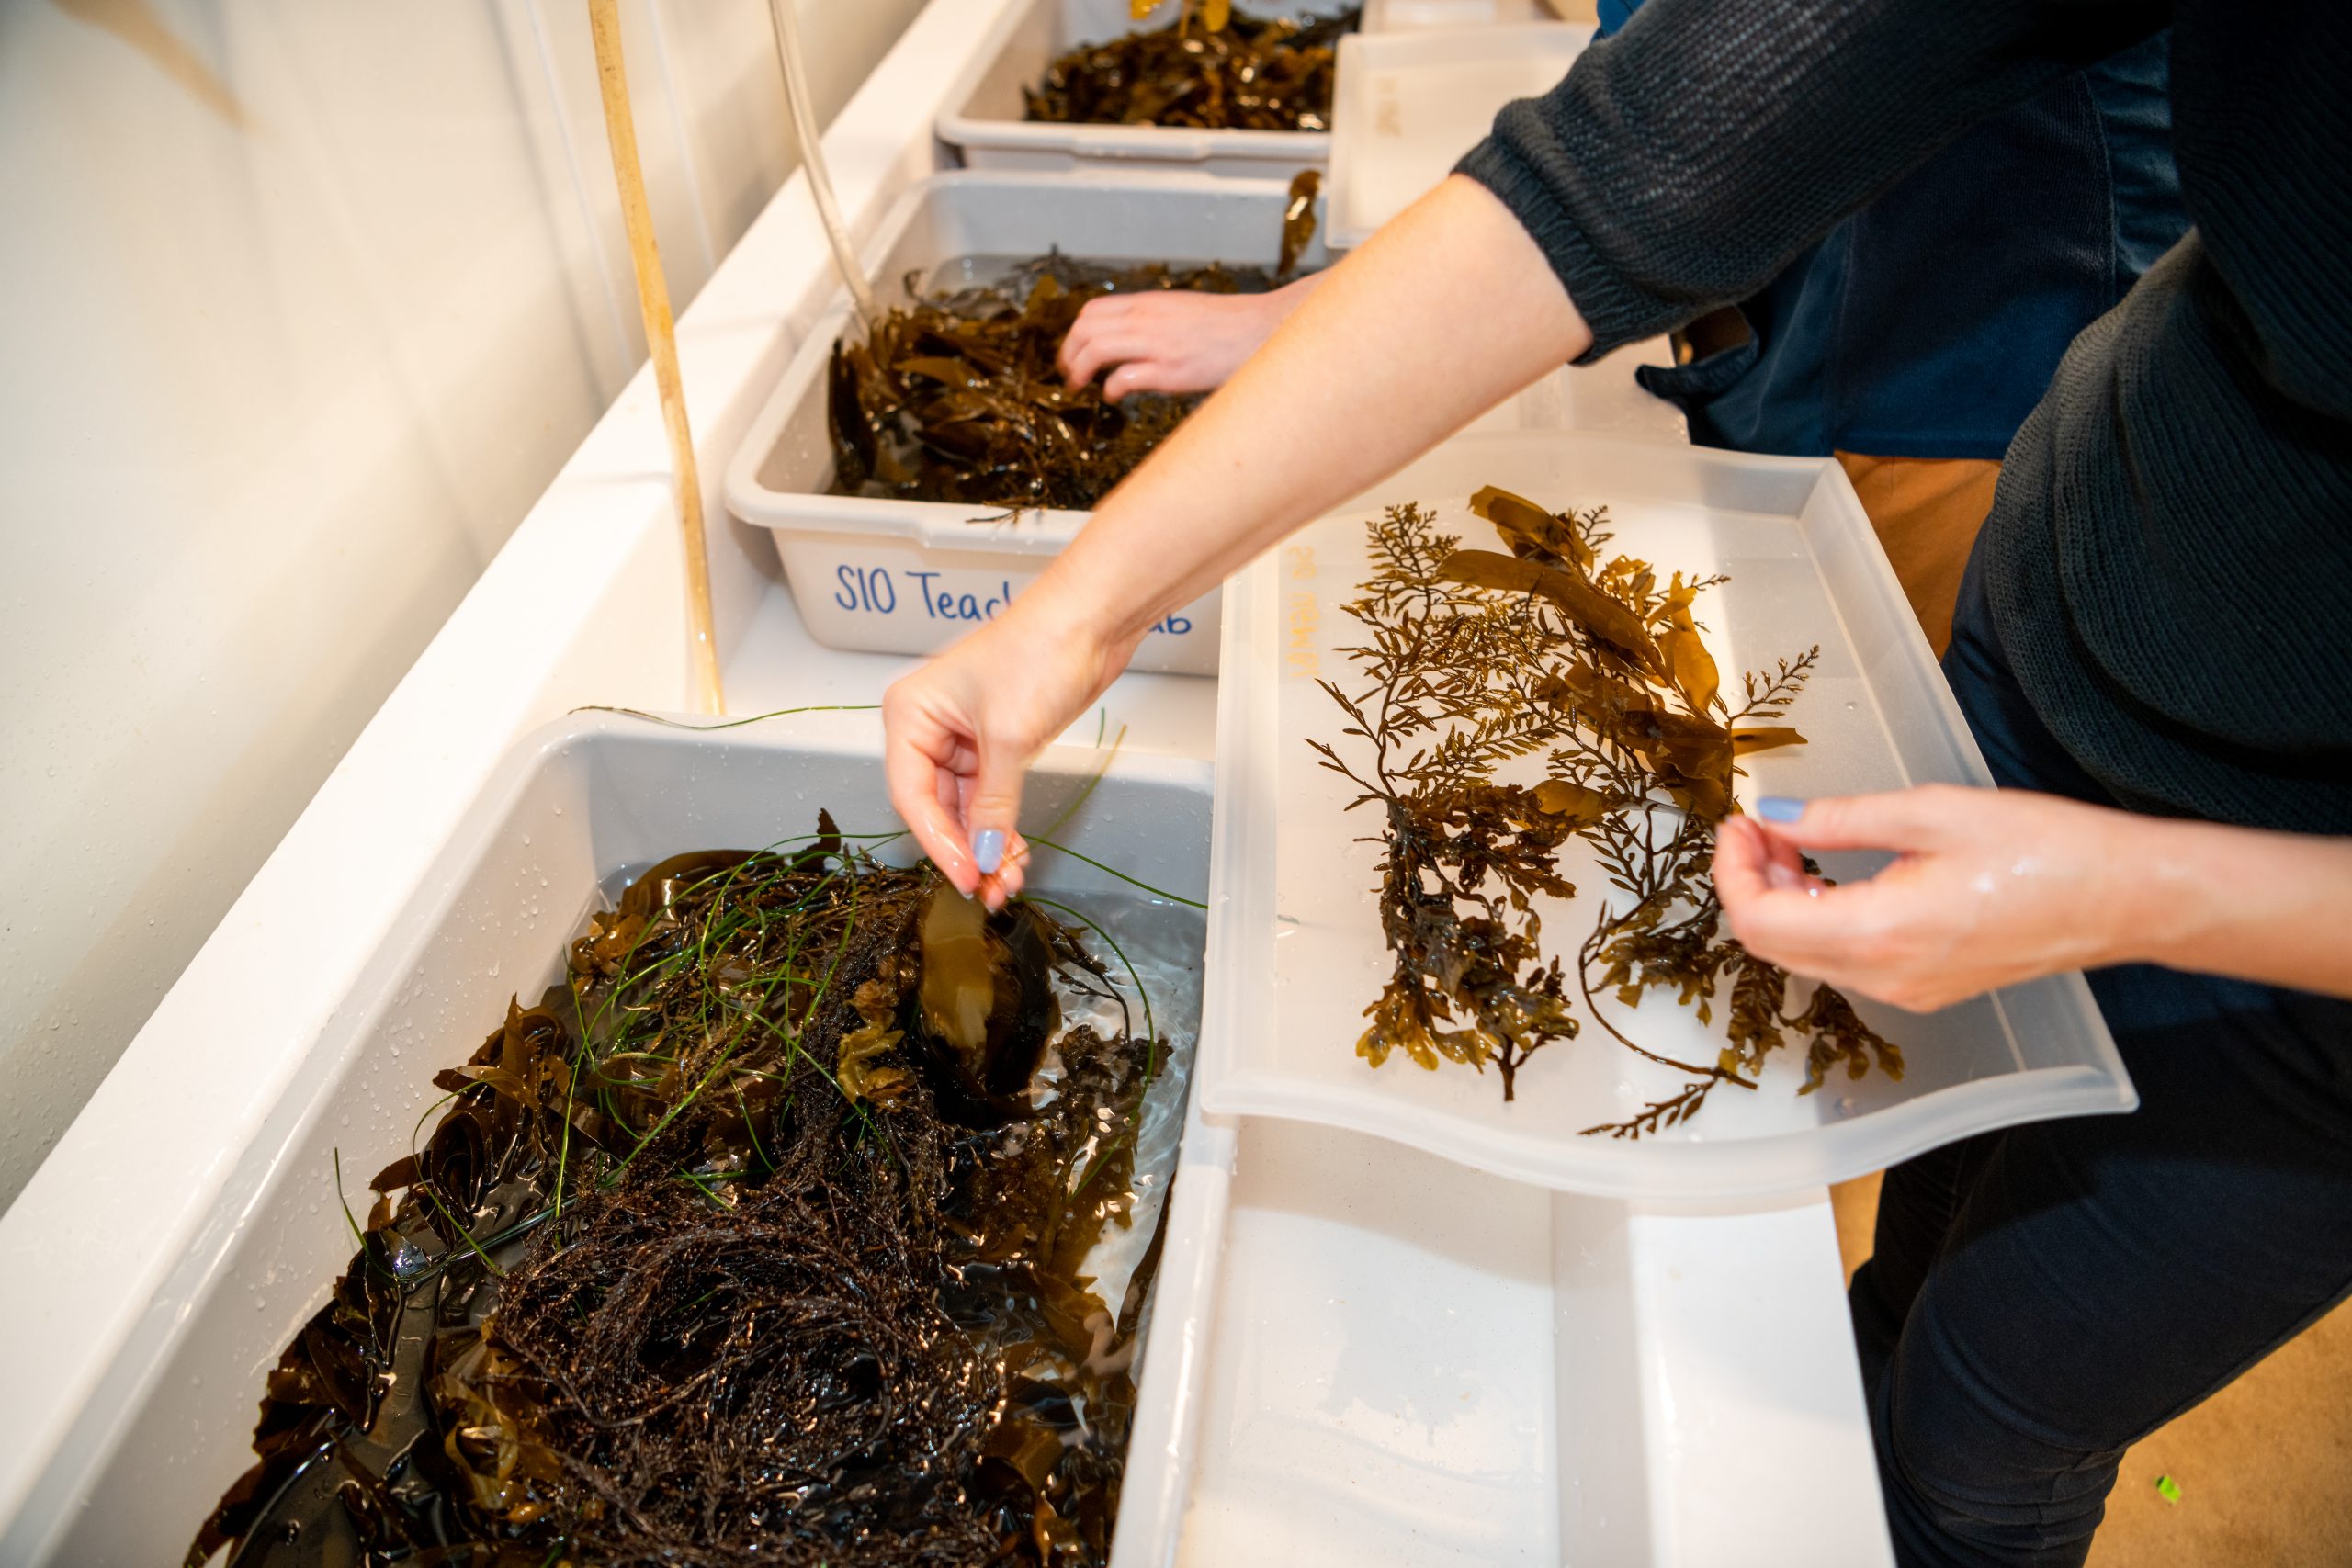 Workshop participants selecting seaweed for pressing. Photo: Kenan Chan, 2023.